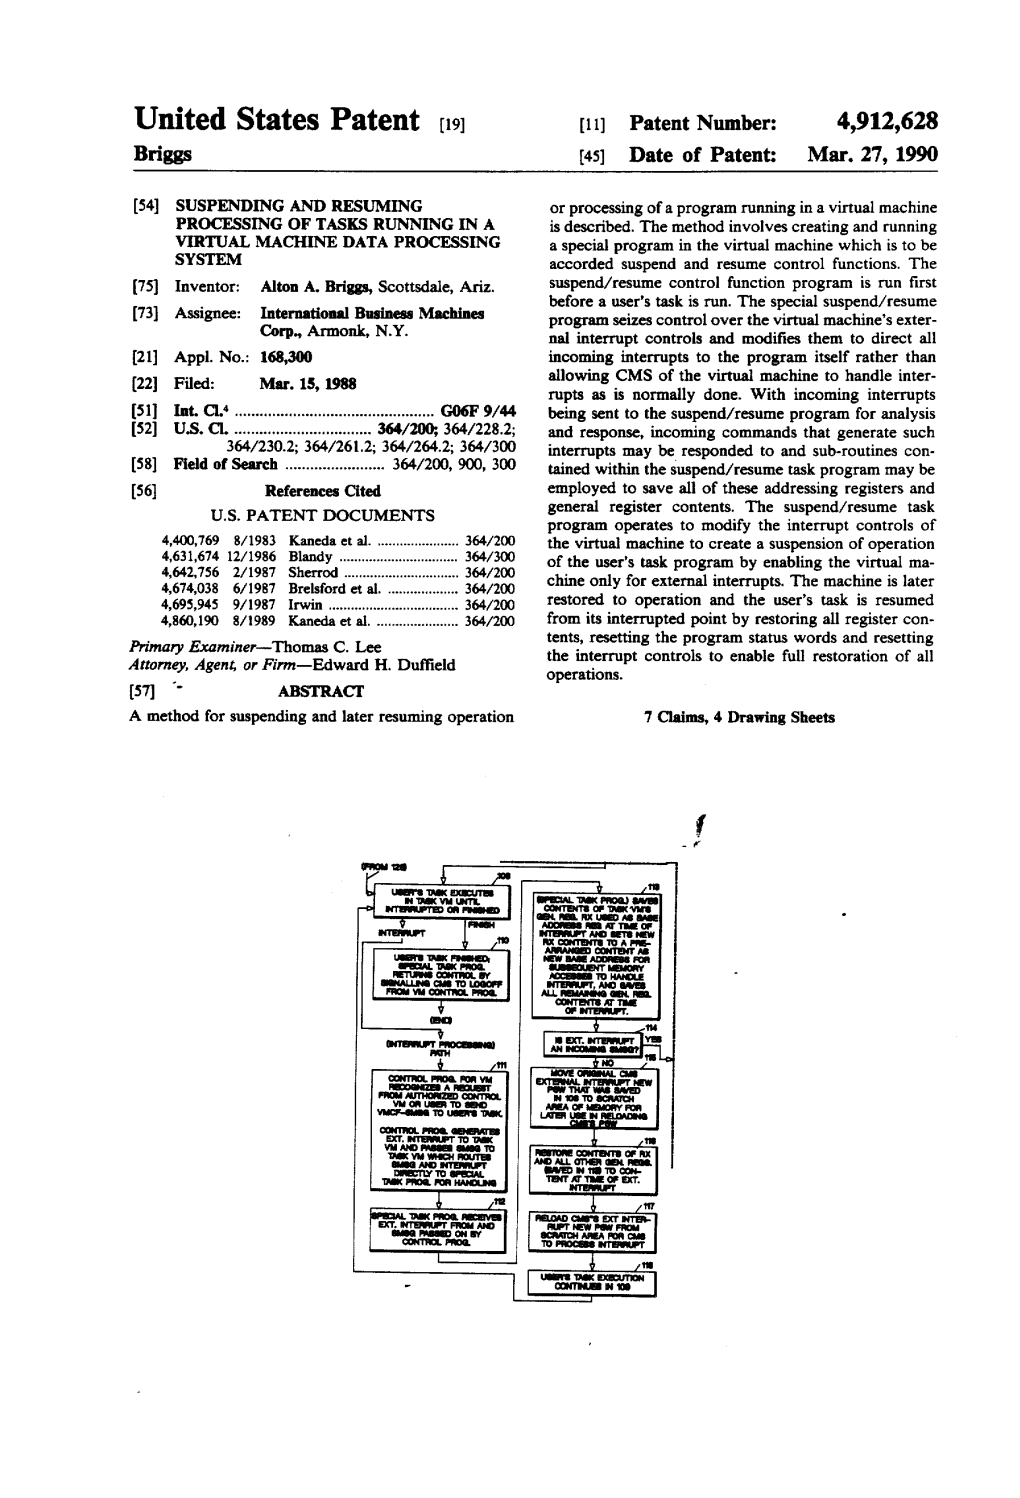 United States Patent (19) 11 Patent Number: 4,912,628 Briggs (45) Date of Patent: Mar